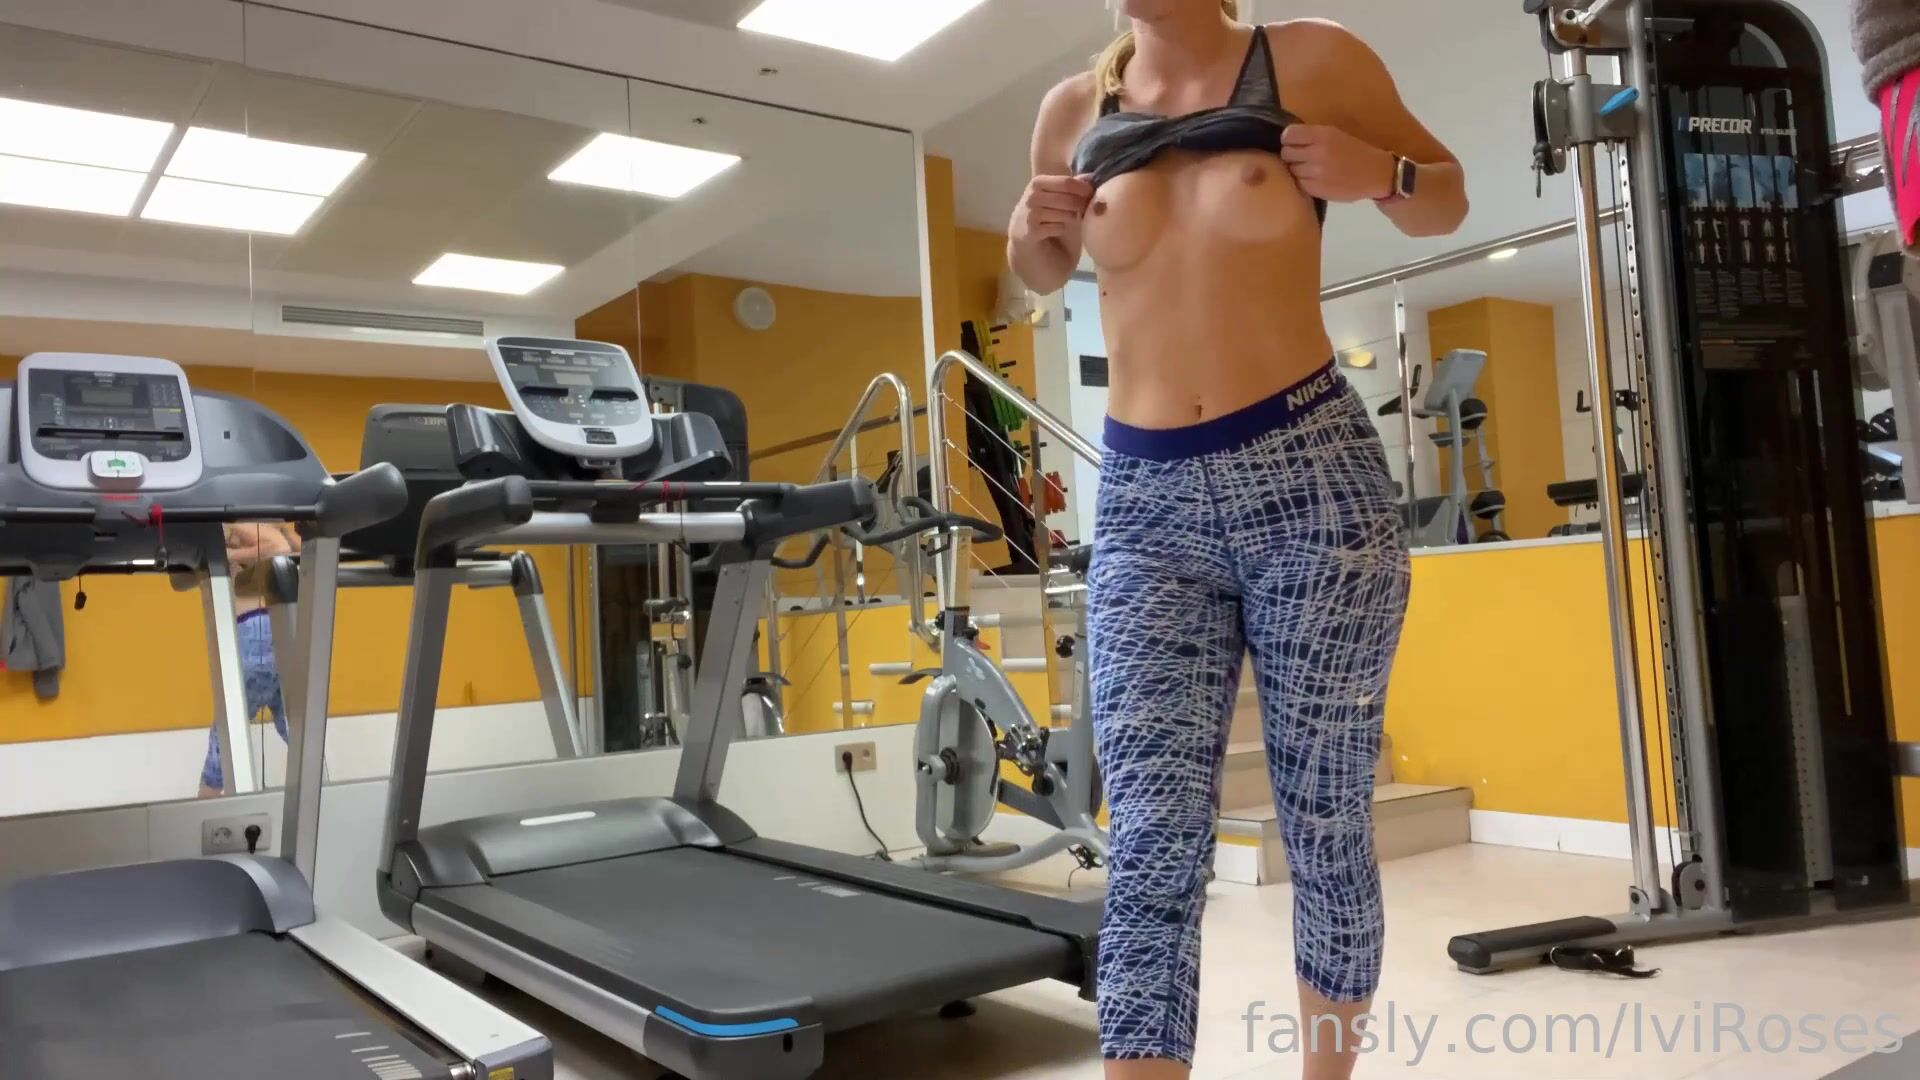 IviRoses Bottomless Treadmill